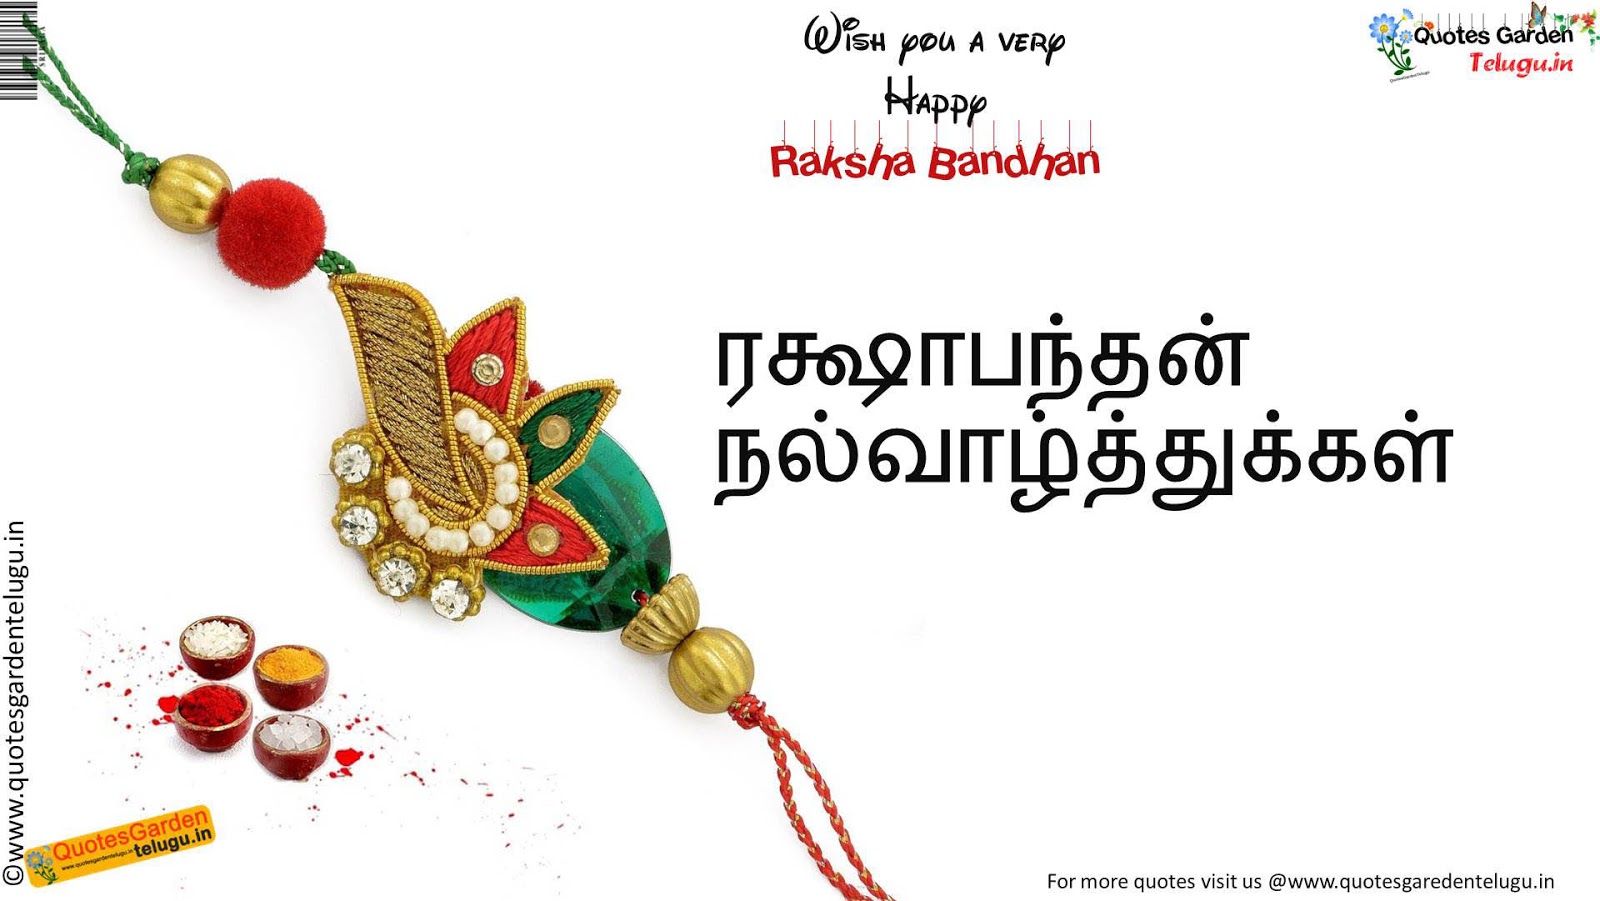 Raksha bandhan 2020 greetings wishes images in tamil kavithai images  facebook quotes | QUOTES GARDEN TELUGU | Telugu Quotes | English Quotes |  Hindi Quotes |